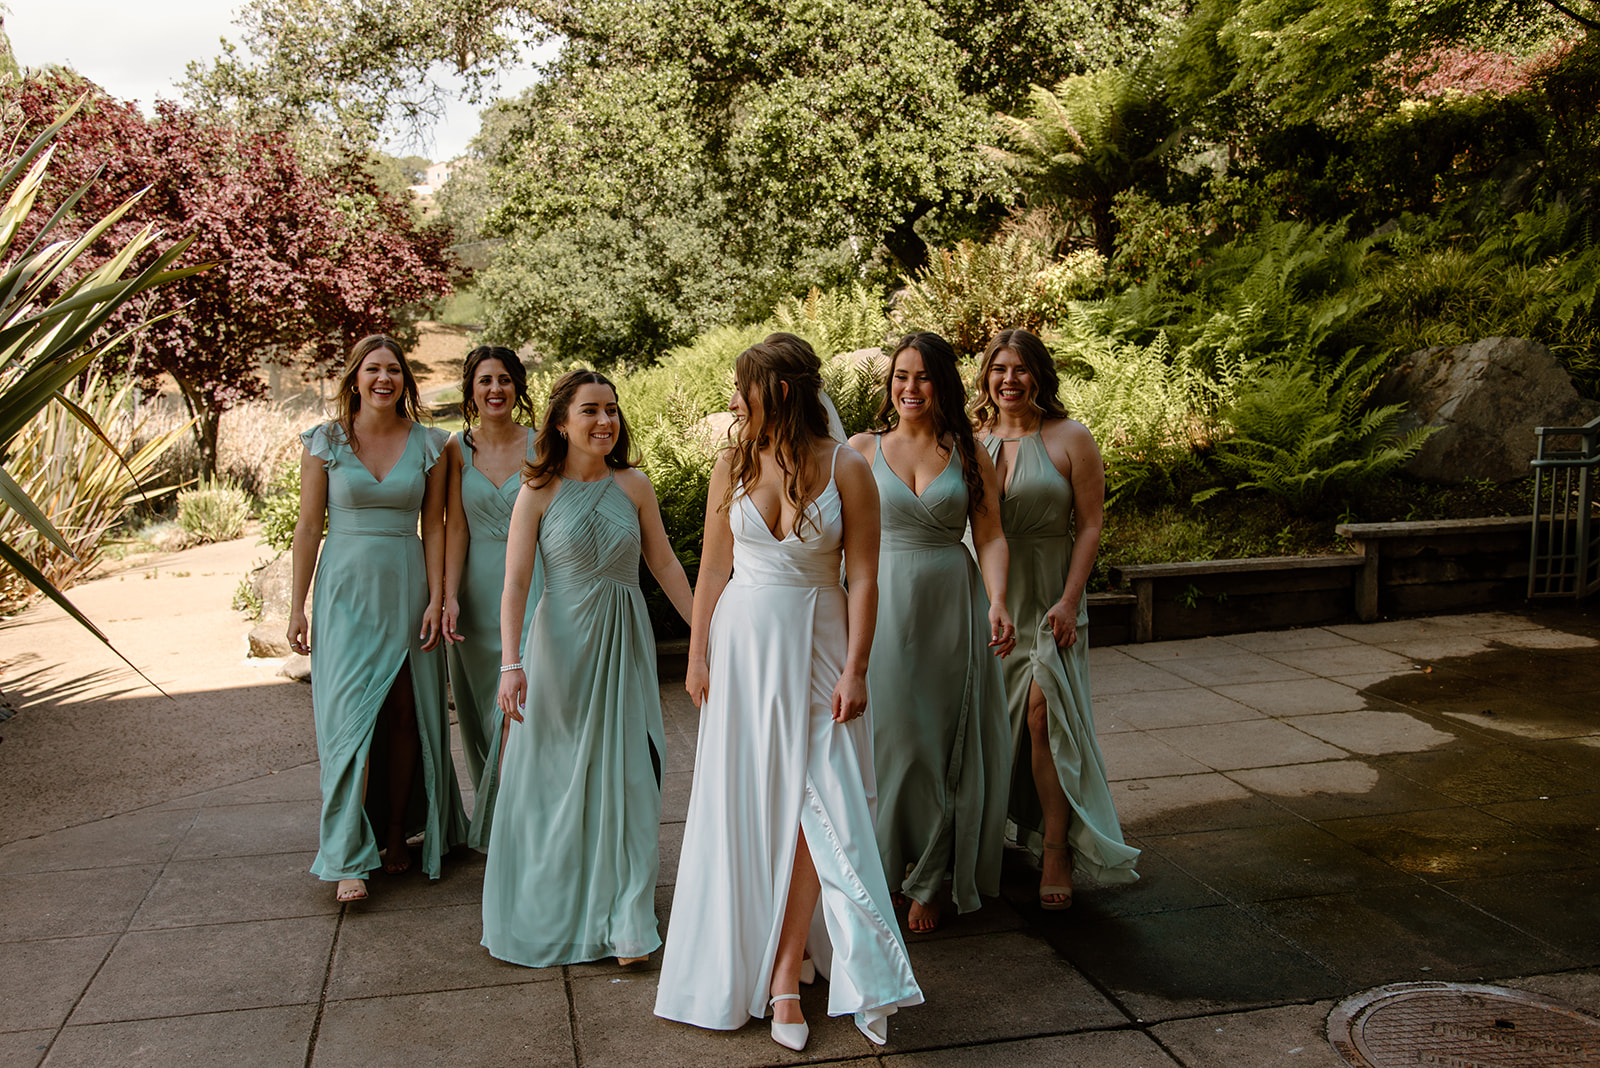 Sydney Jai Photography - Northern California wedding photographer, bridal party photos, bride and bridesmaids